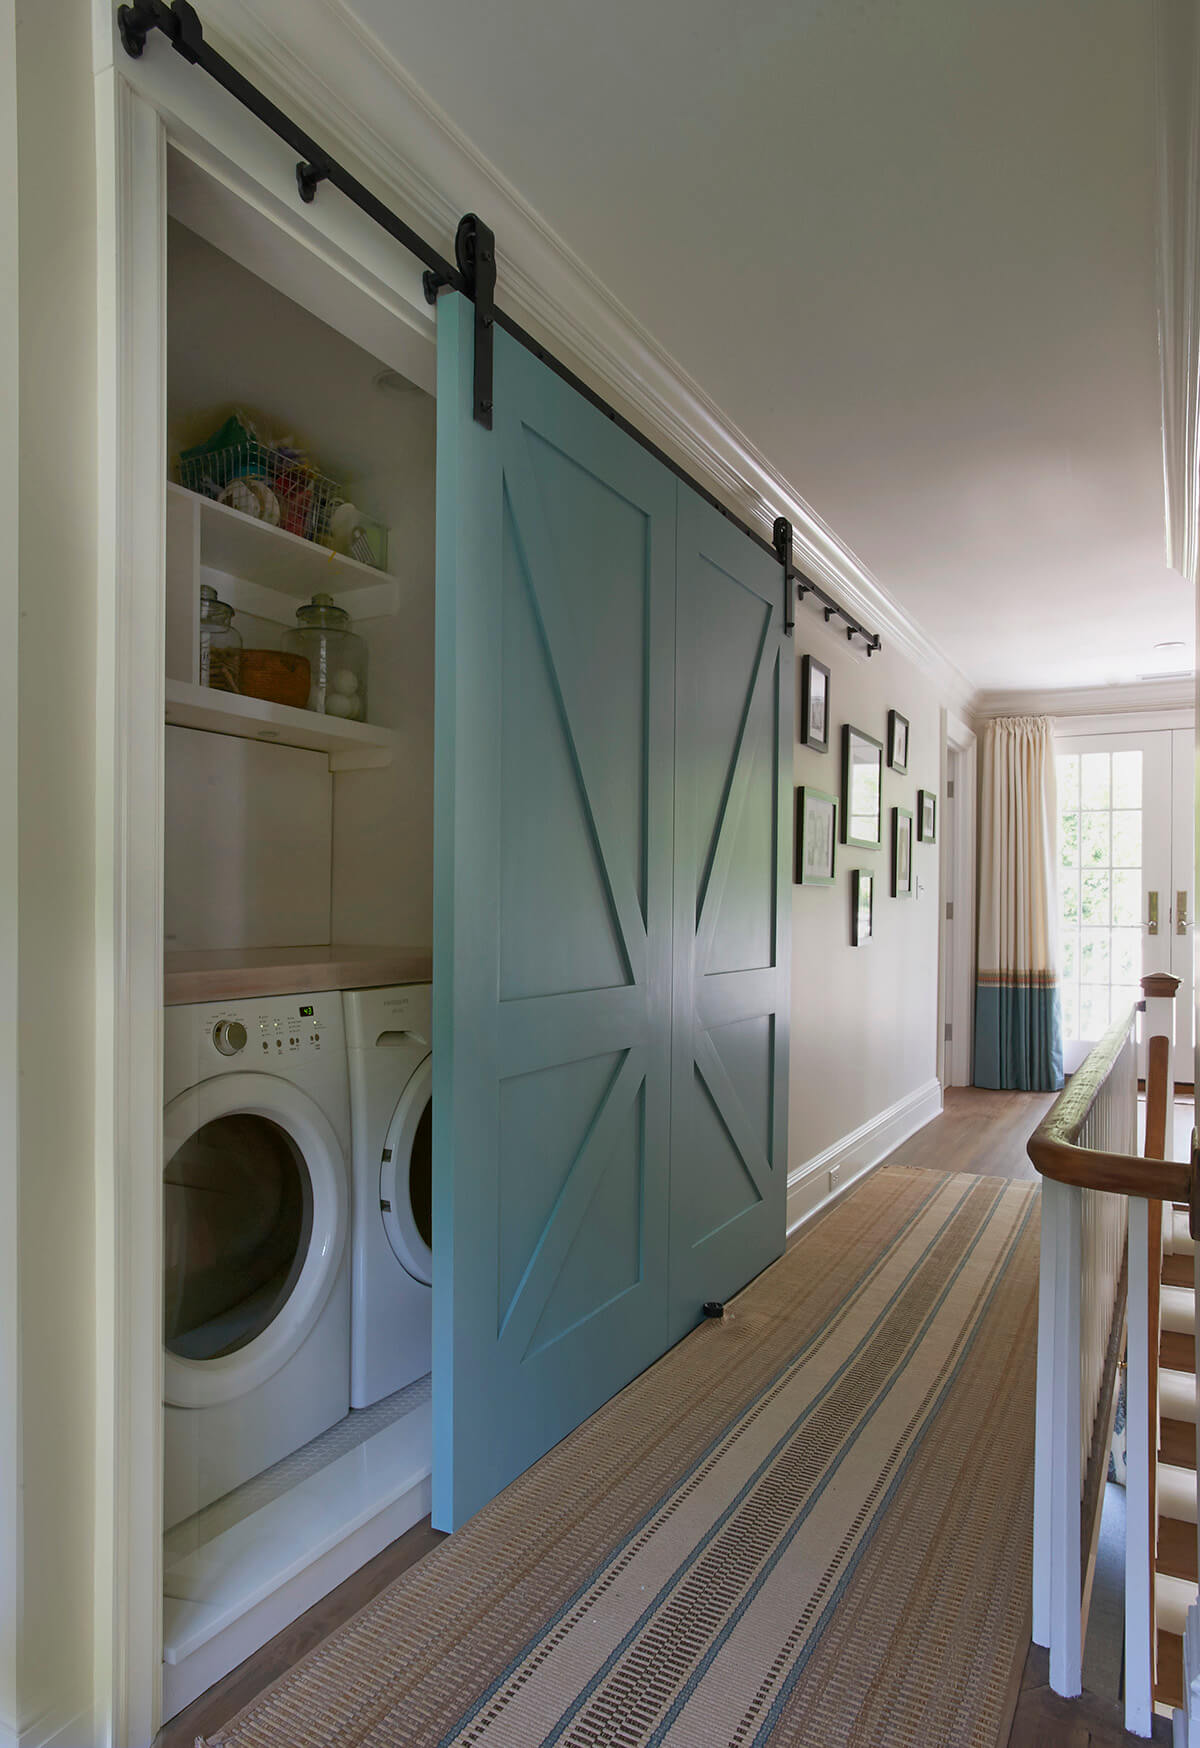 05 small laundry room design ideas homebnc.jpg